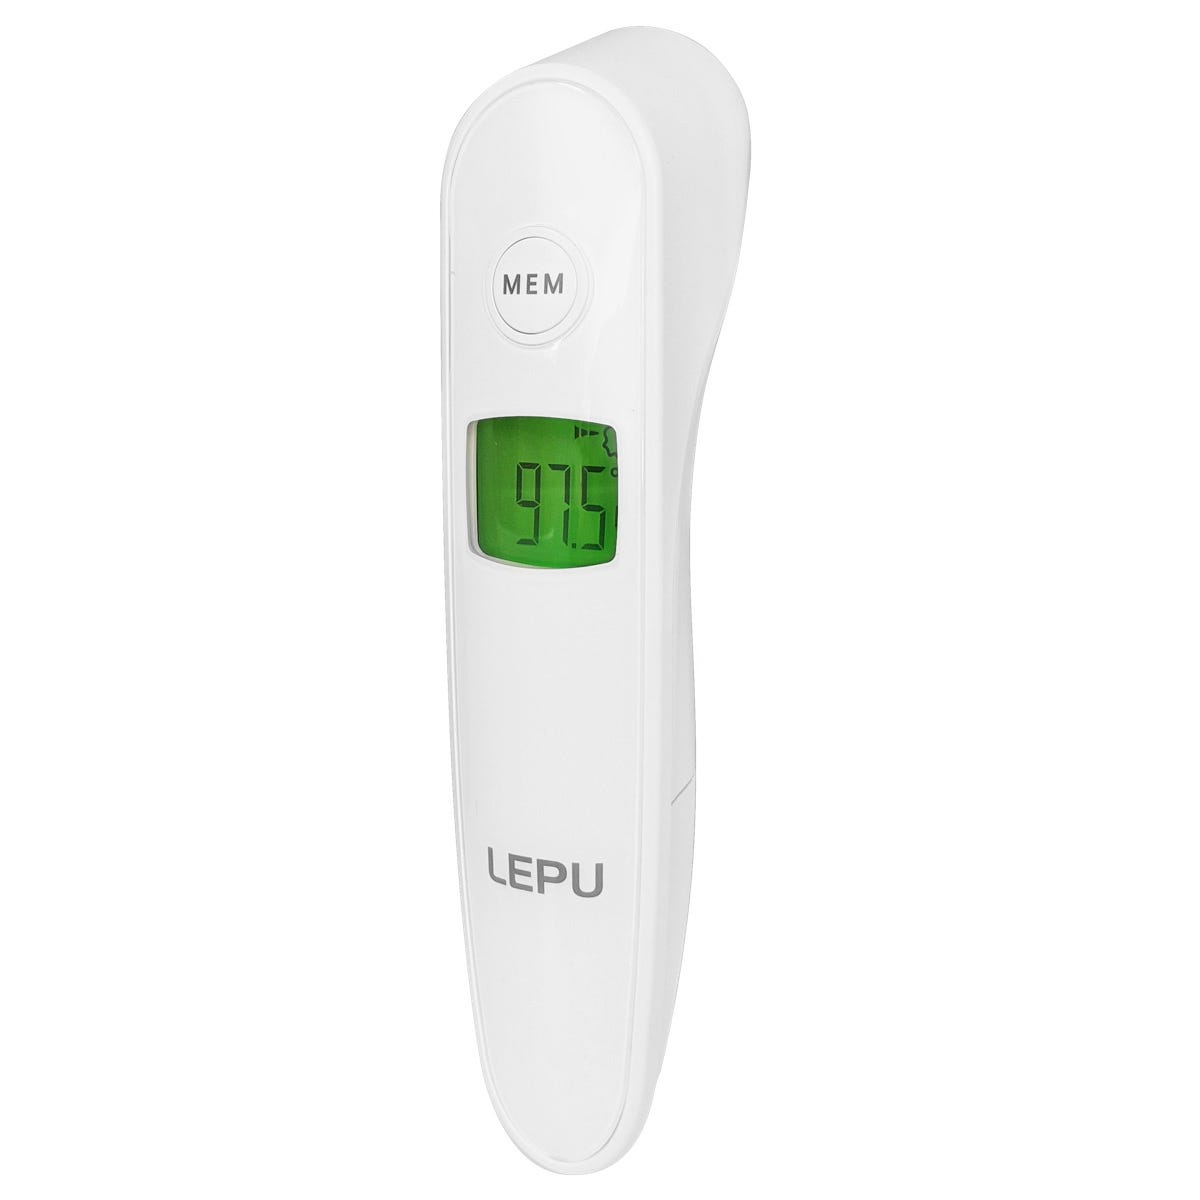 LEPU Infrared Thermometer